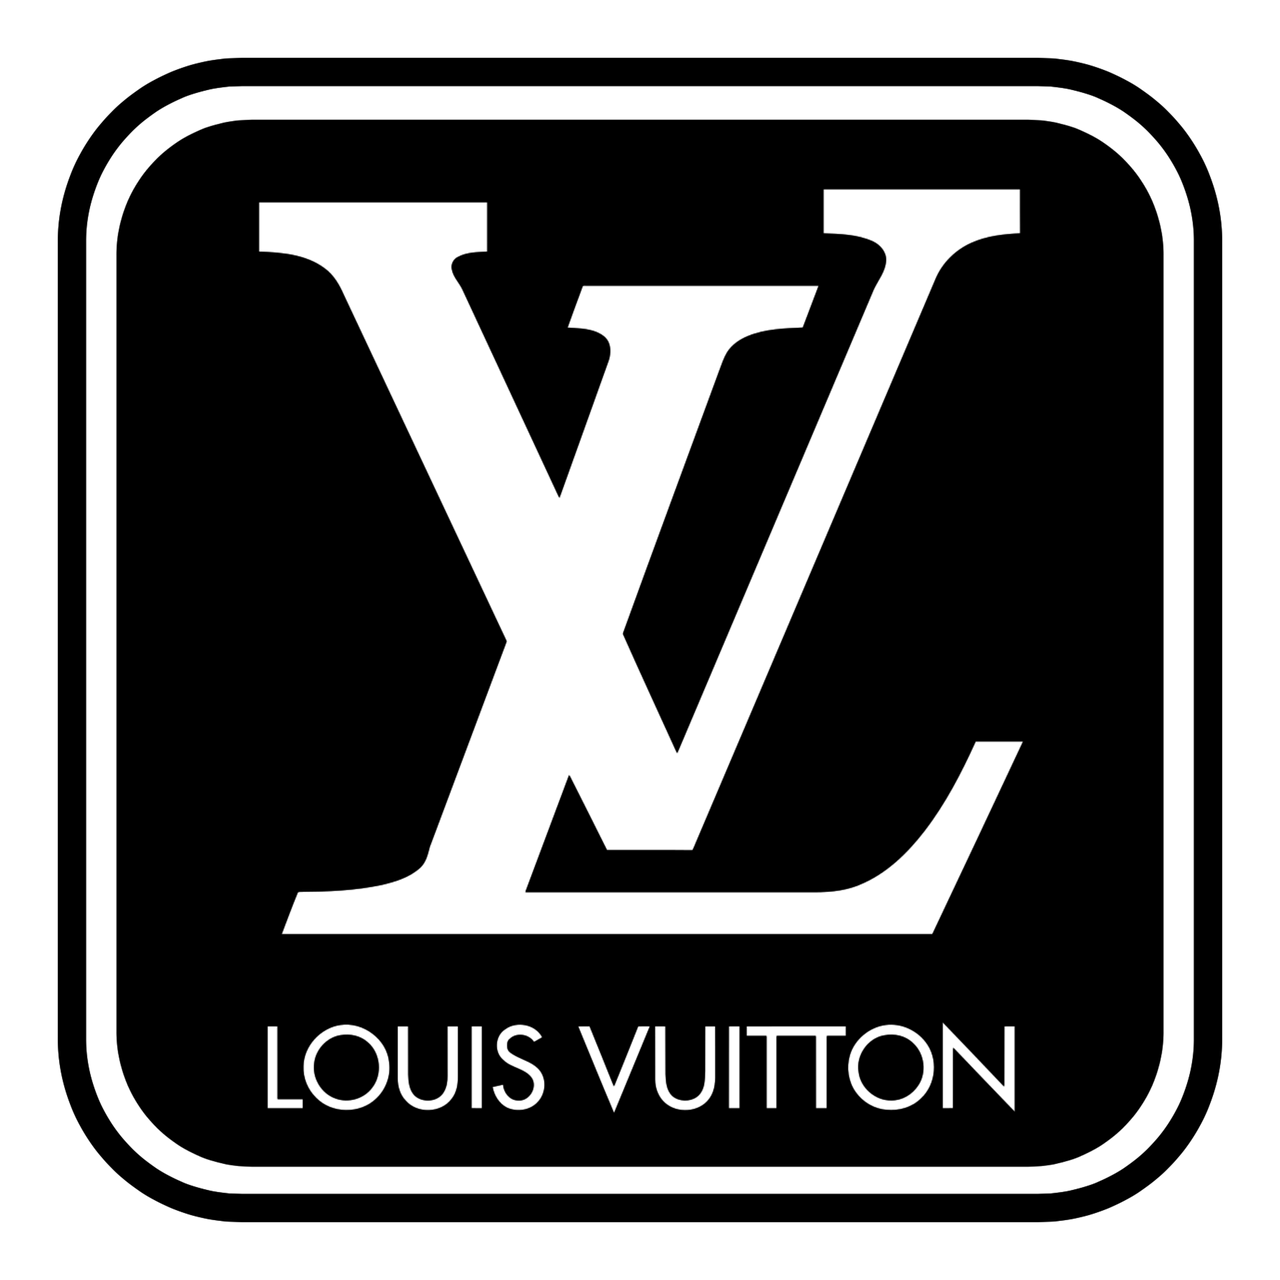 Transparent HD Louis Vuitton White Text Logo